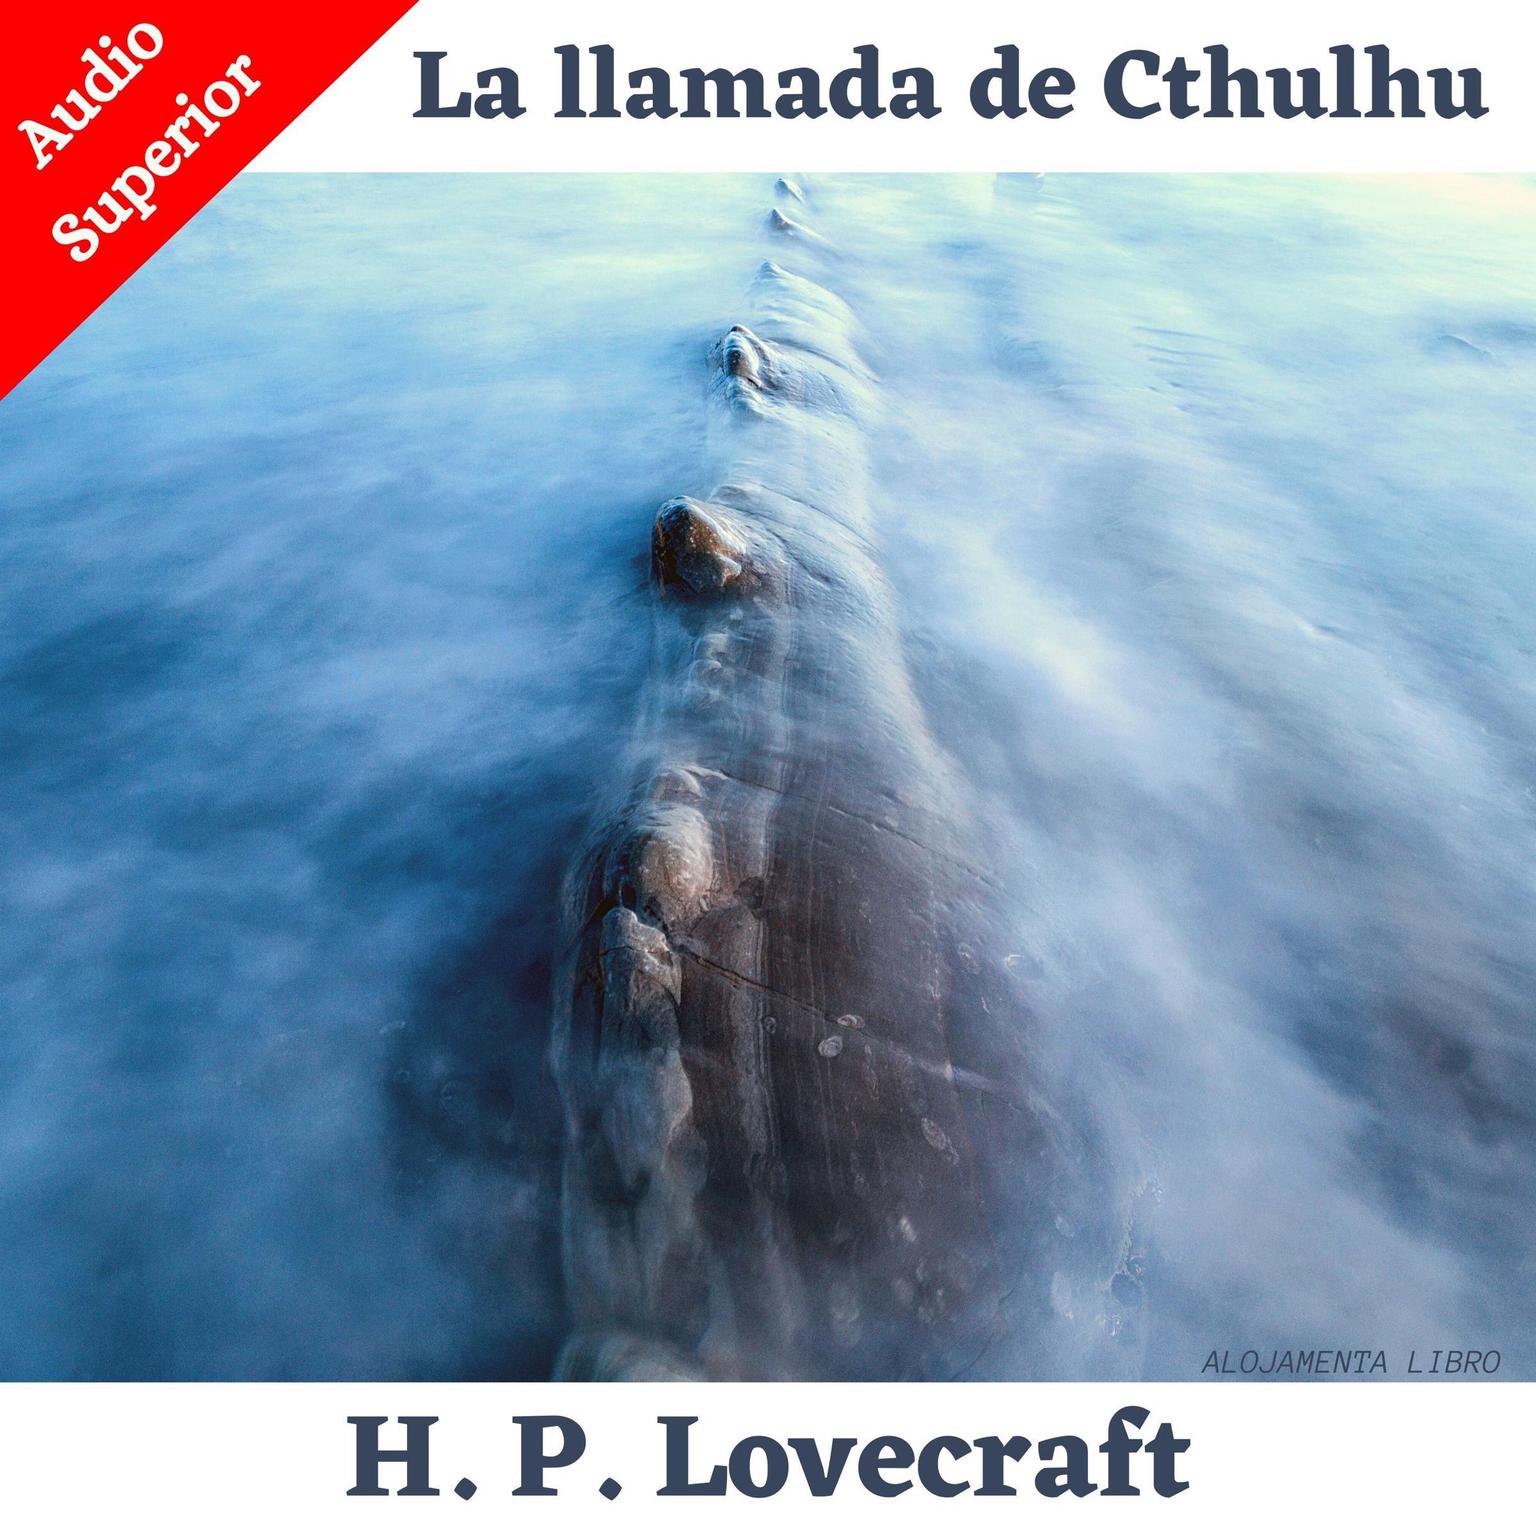 La llamada de Cthulhu Audiobook, by H. P. Lovecraft